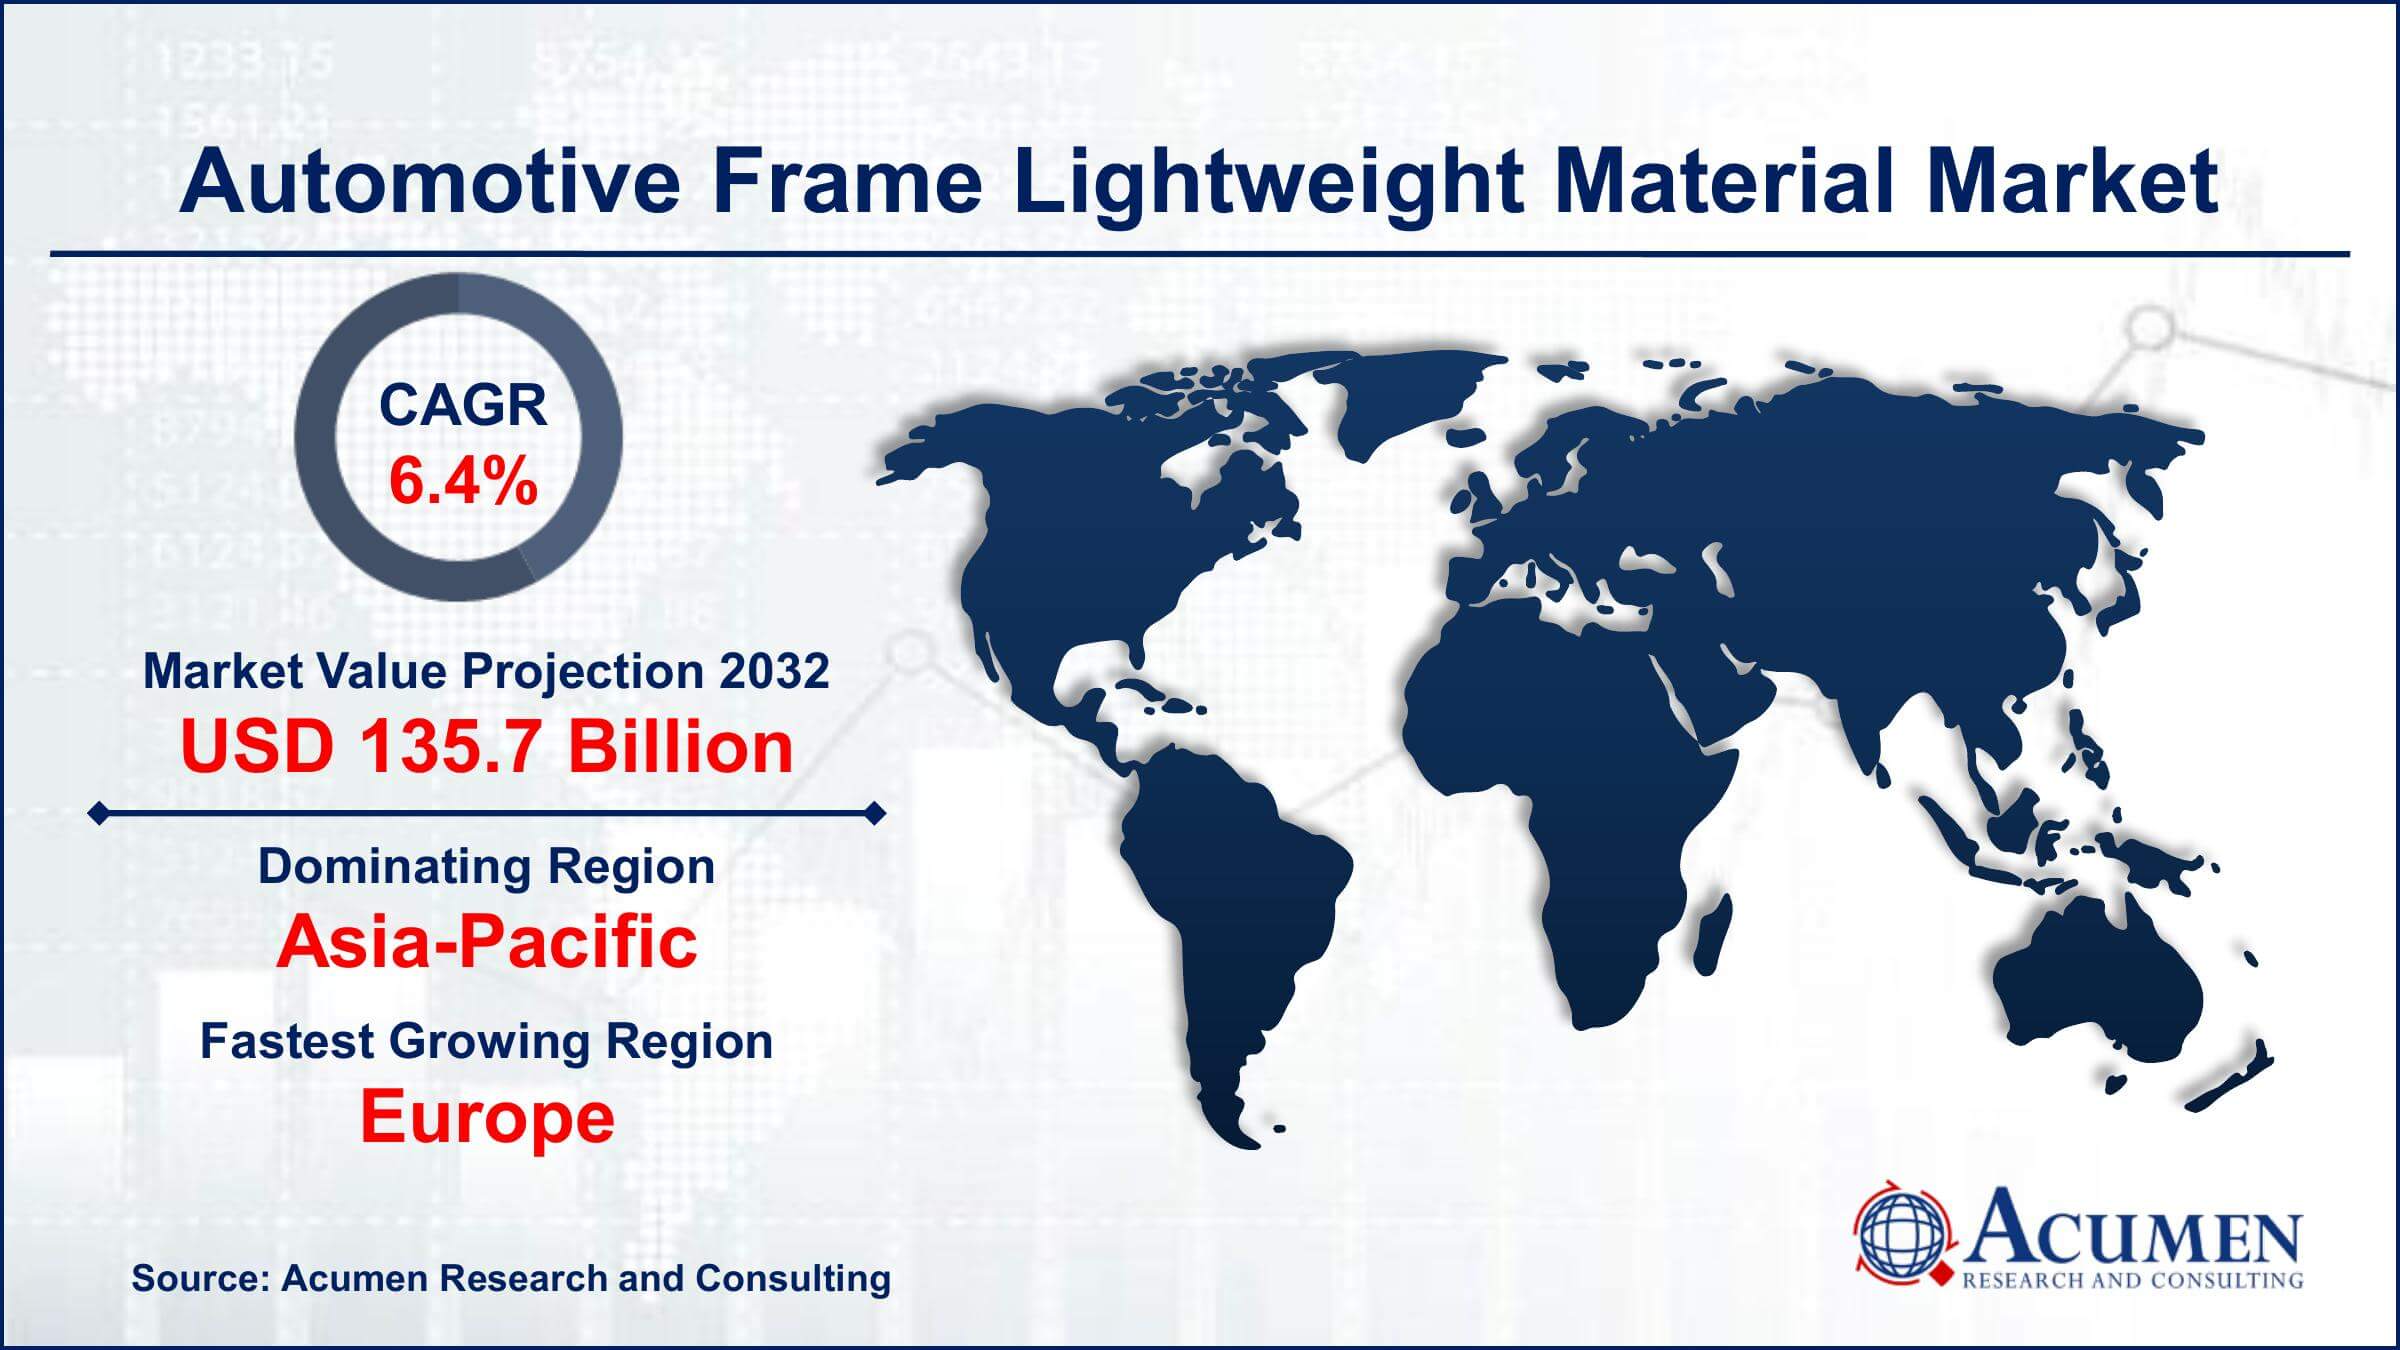 Global Automotive Frame Lightweight Material Market Trends